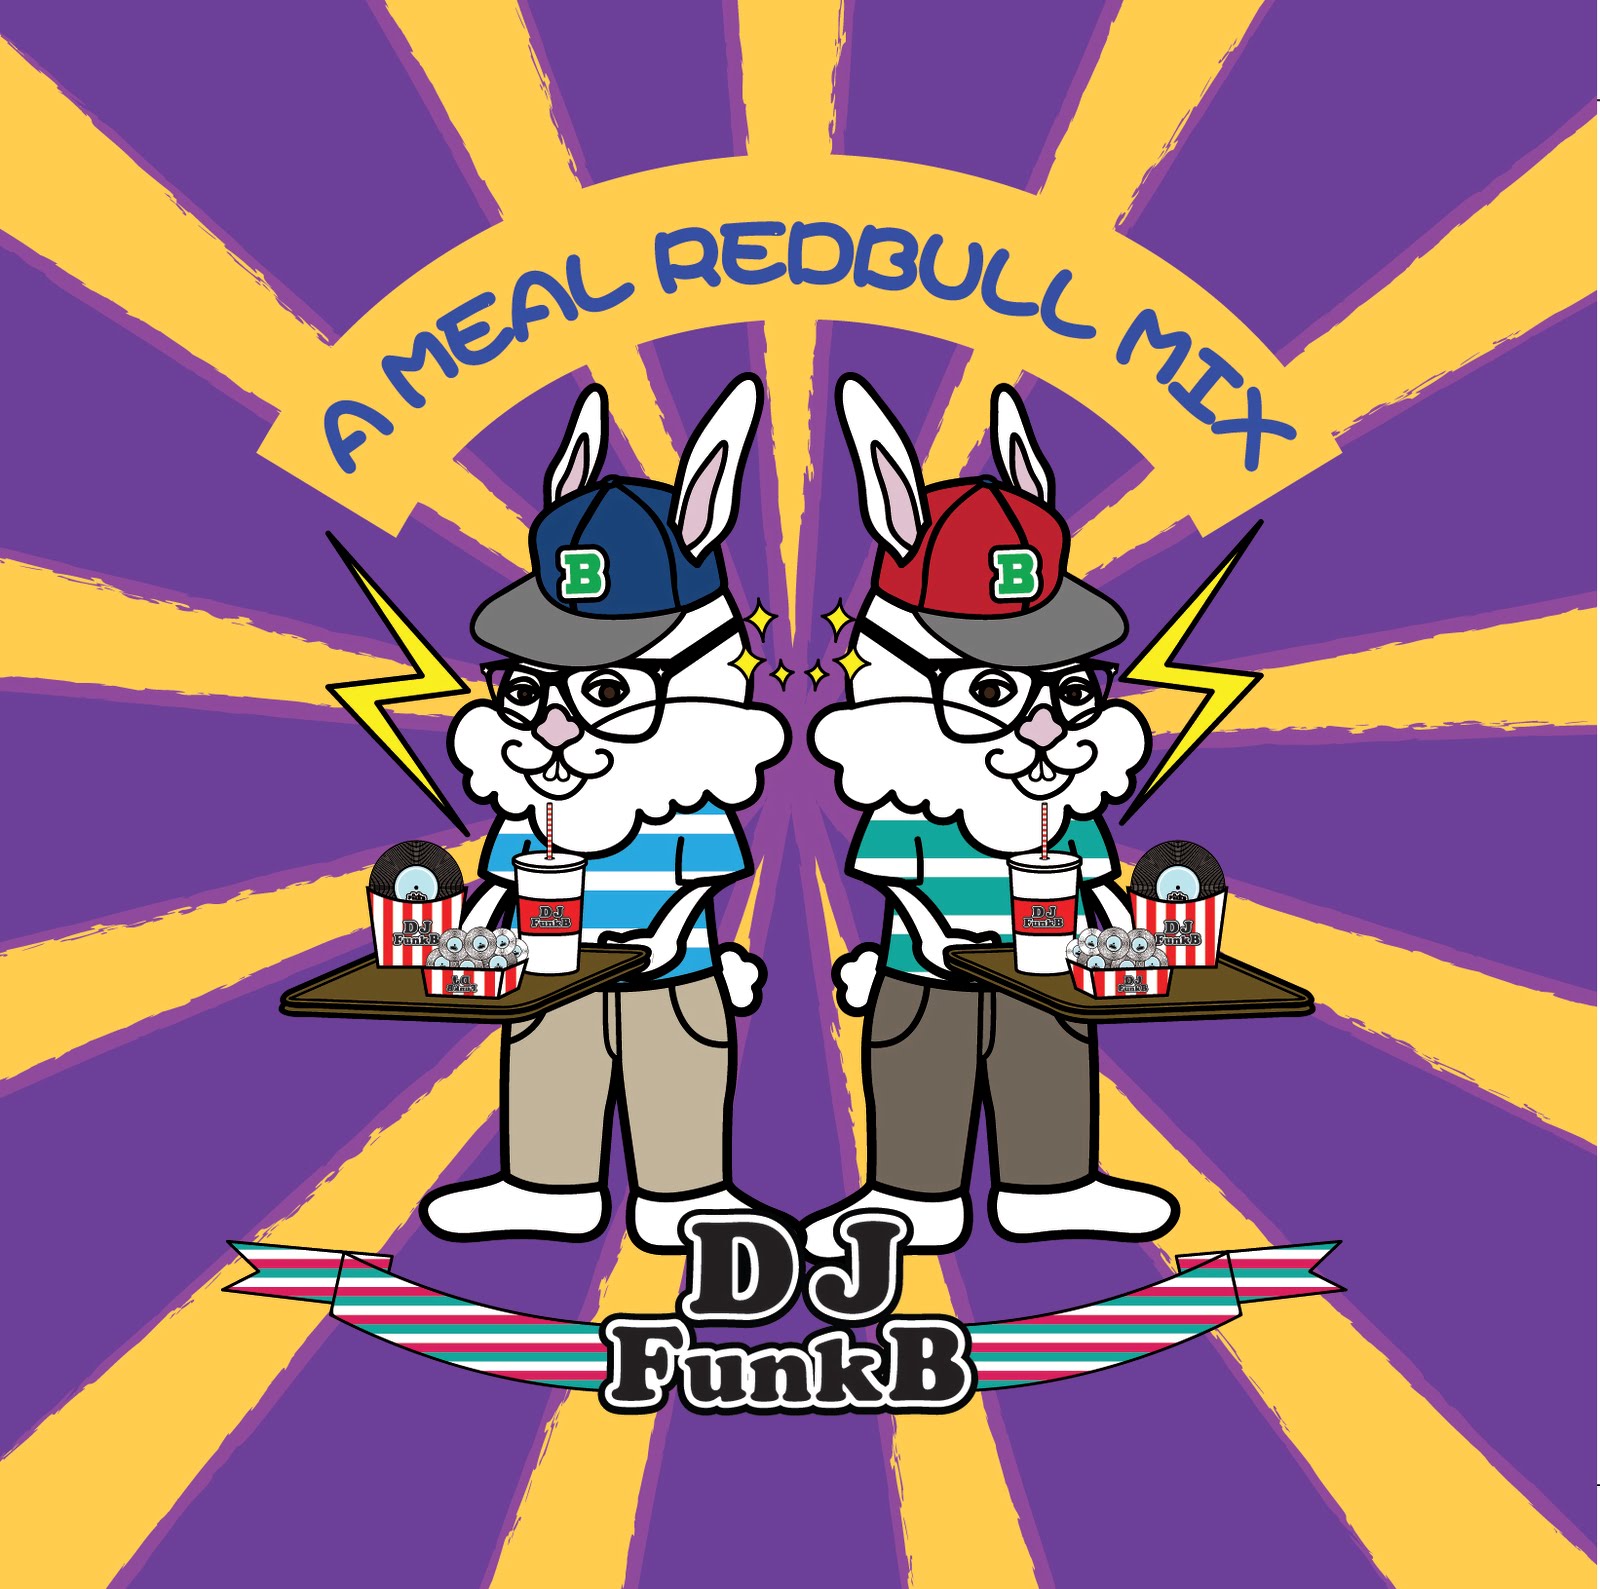 Click here download DJ FUNKB's 《A MEAL REDBULL MIX》